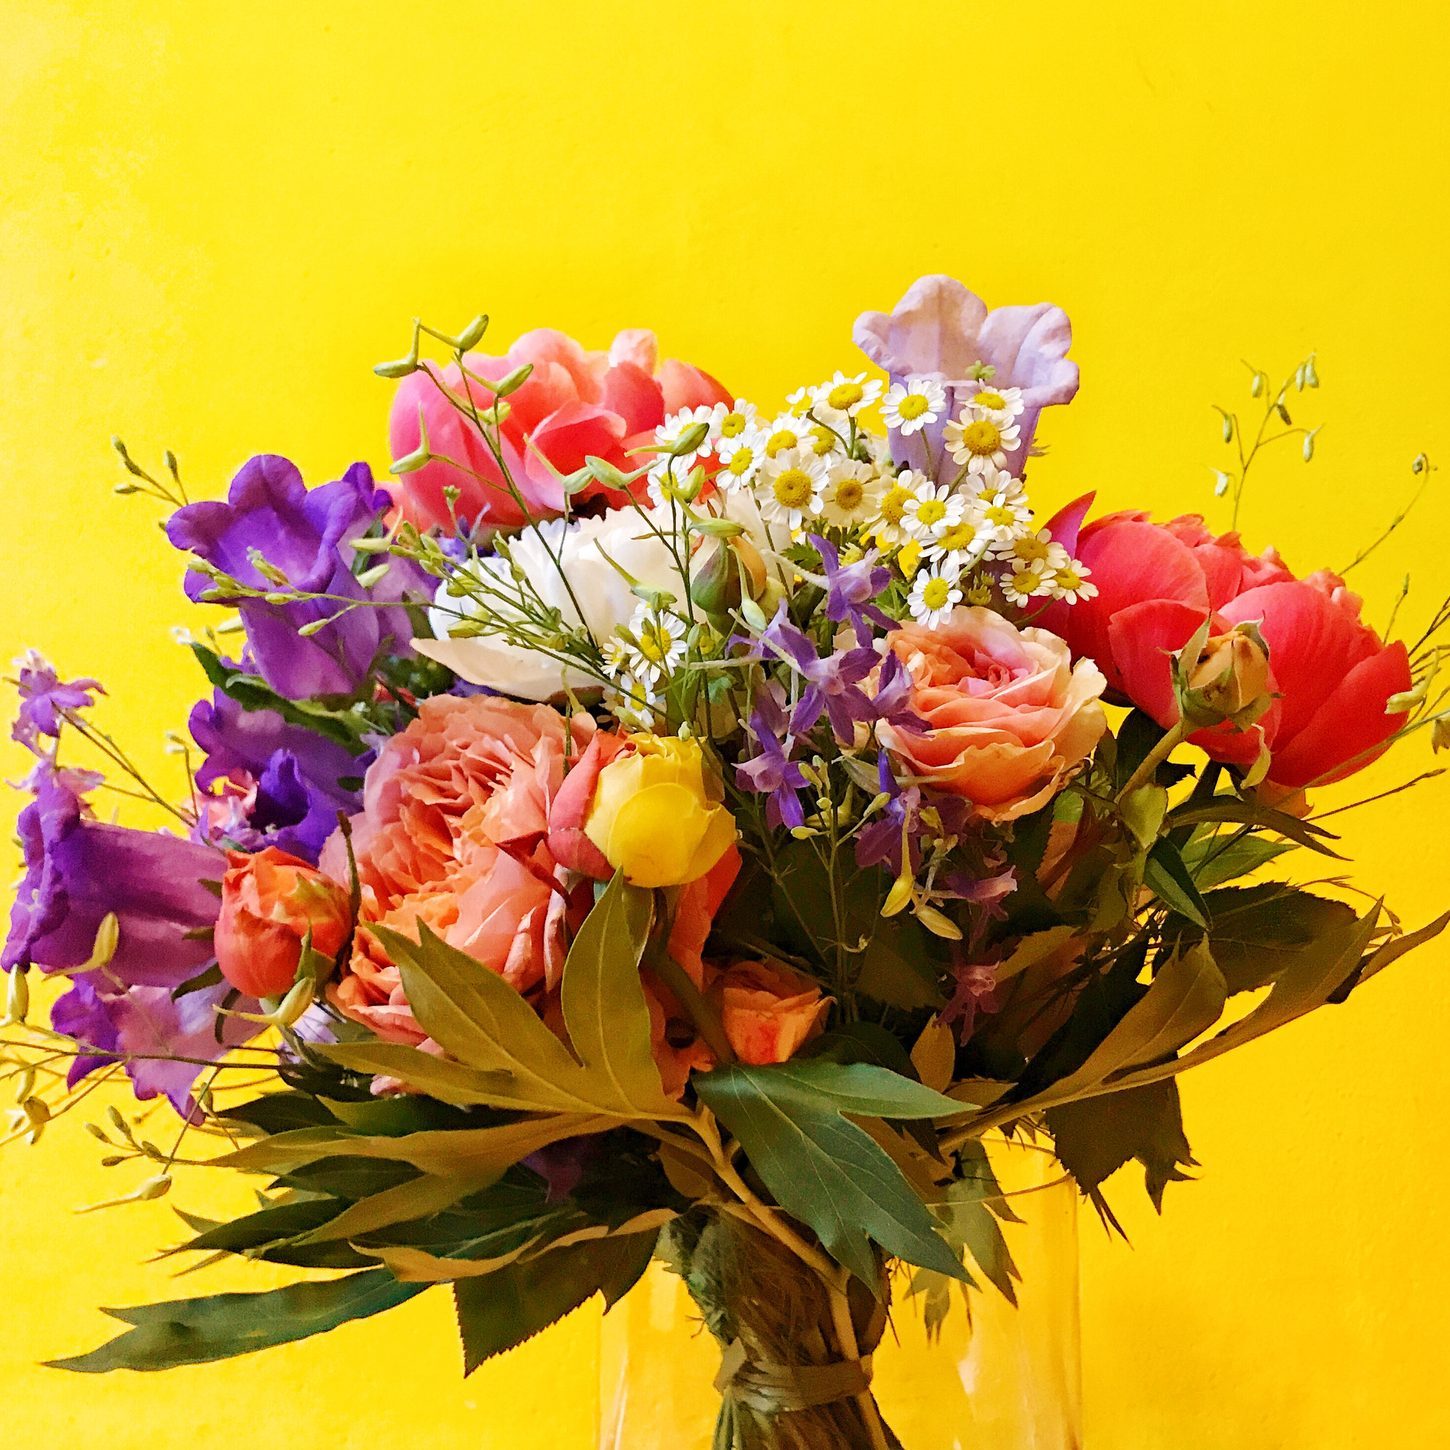 Flower bouquet - Freshness